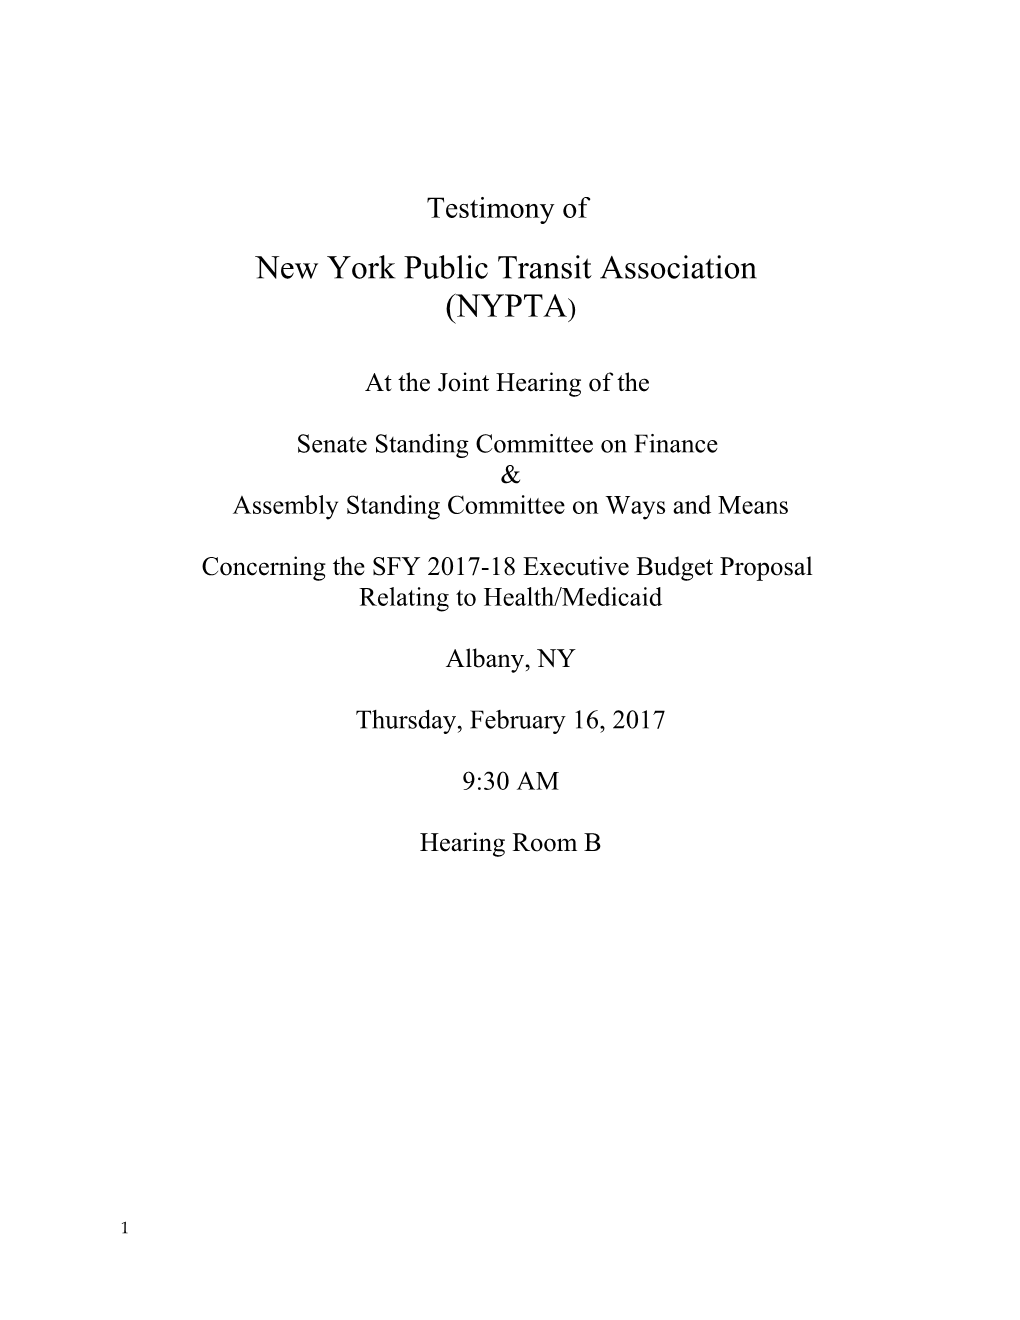 New York Public Transit Association